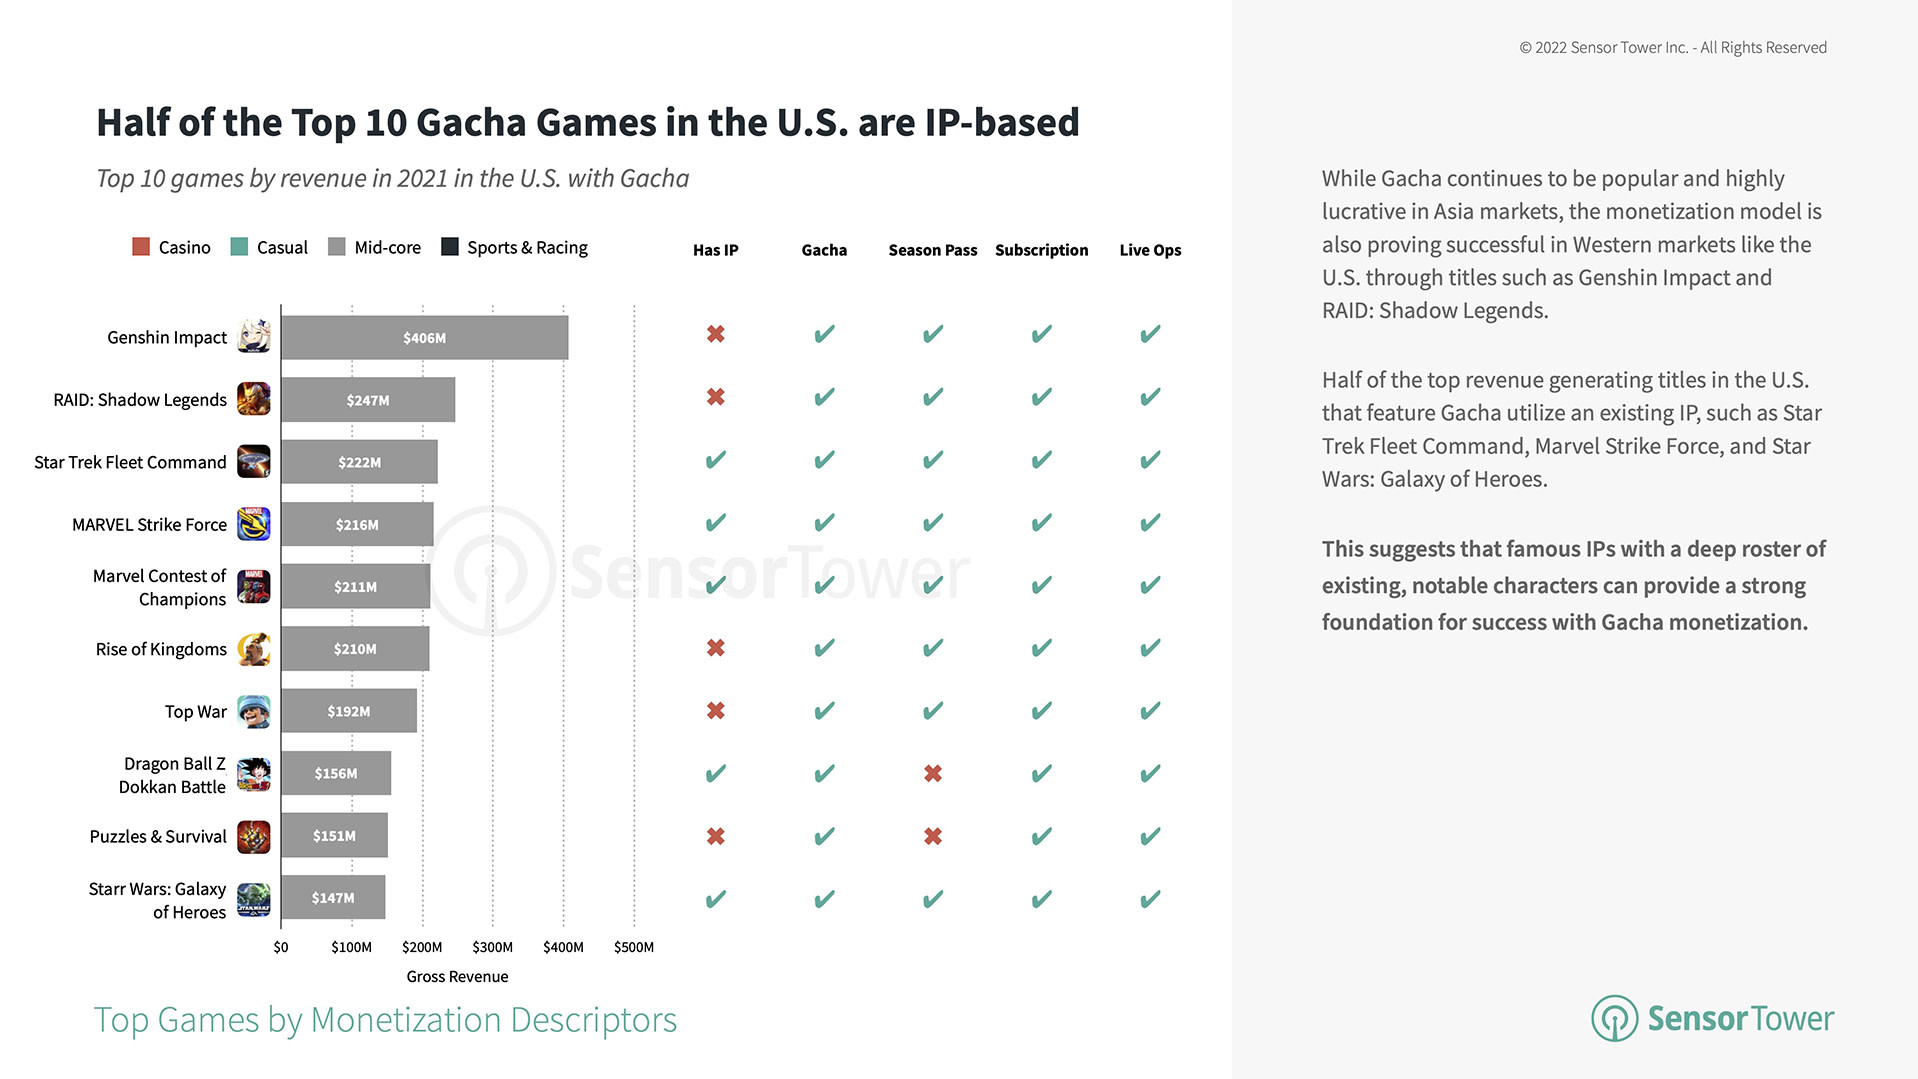 Top 10 Gacha Games